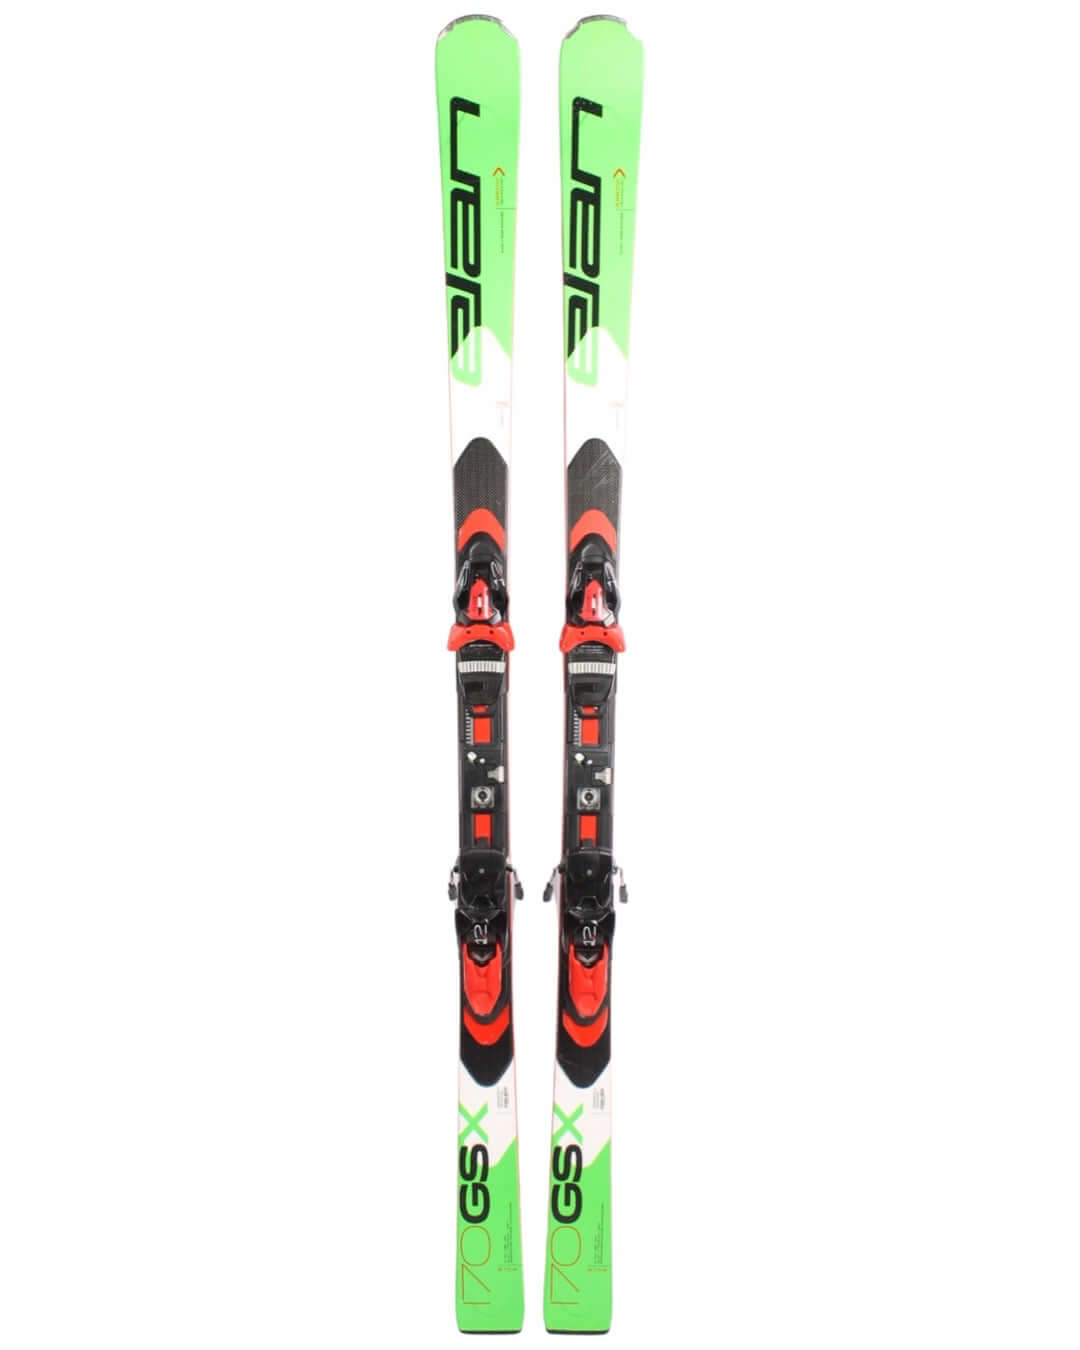 Ski - Elan GSX Race - 2599 kr